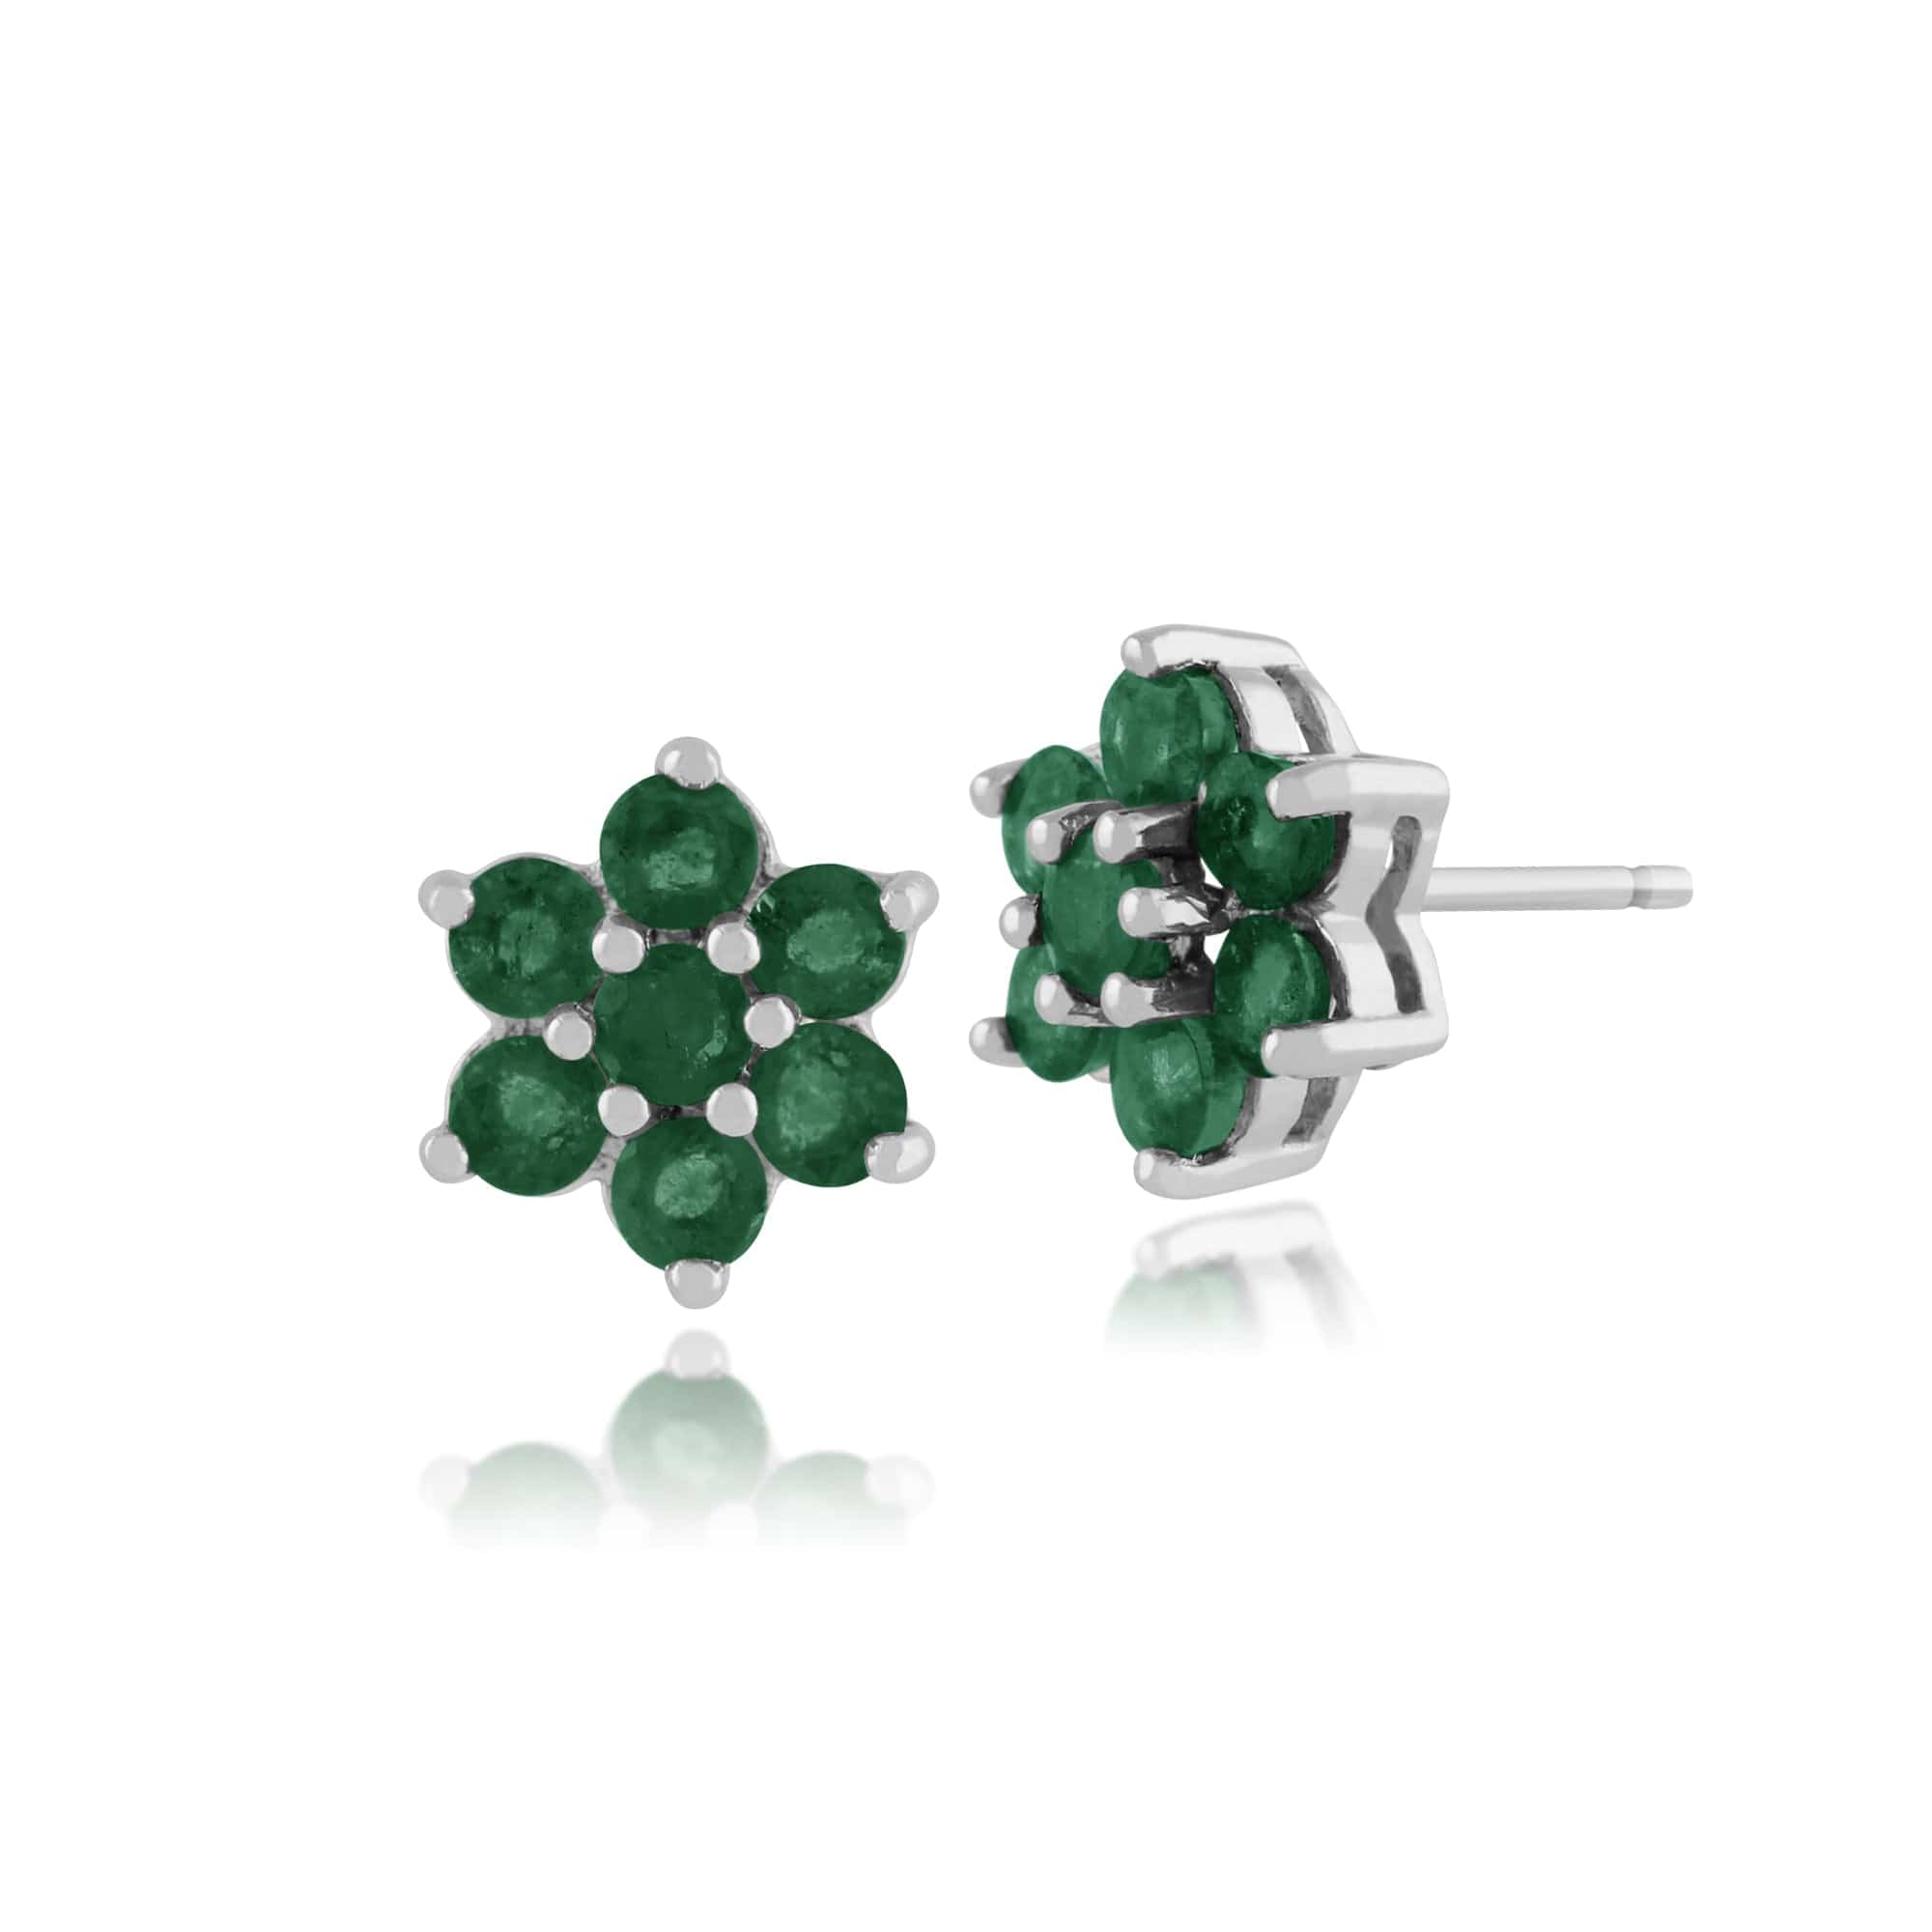 Floral Round Emerald Cluster Stud Earrings in 925 Sterling Silver - Gemondo